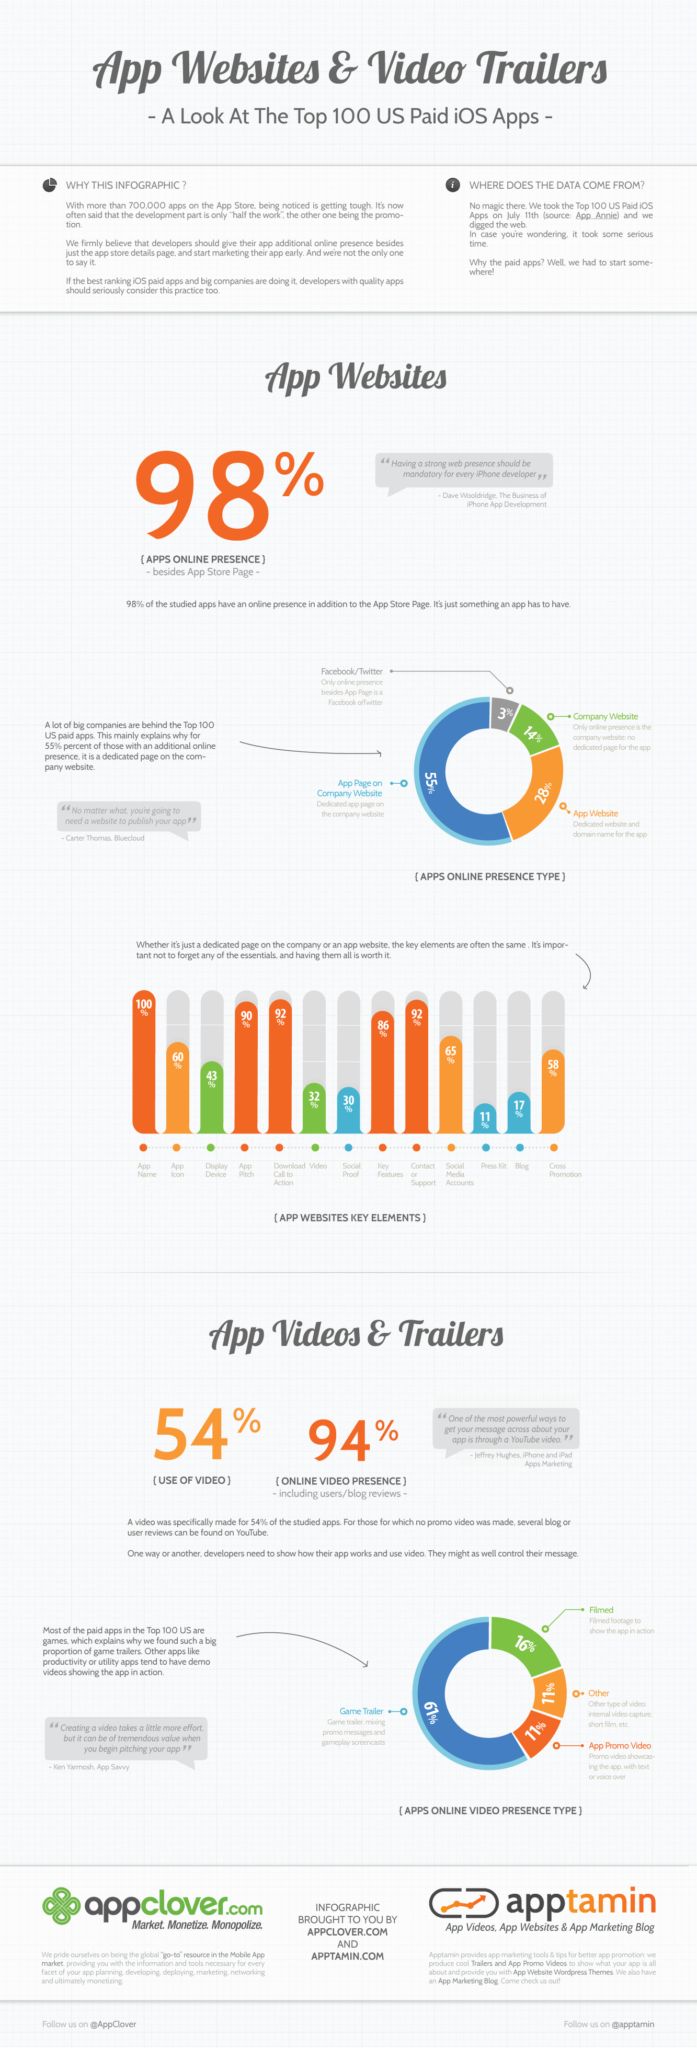 App Video Trailers & App Websites infographic